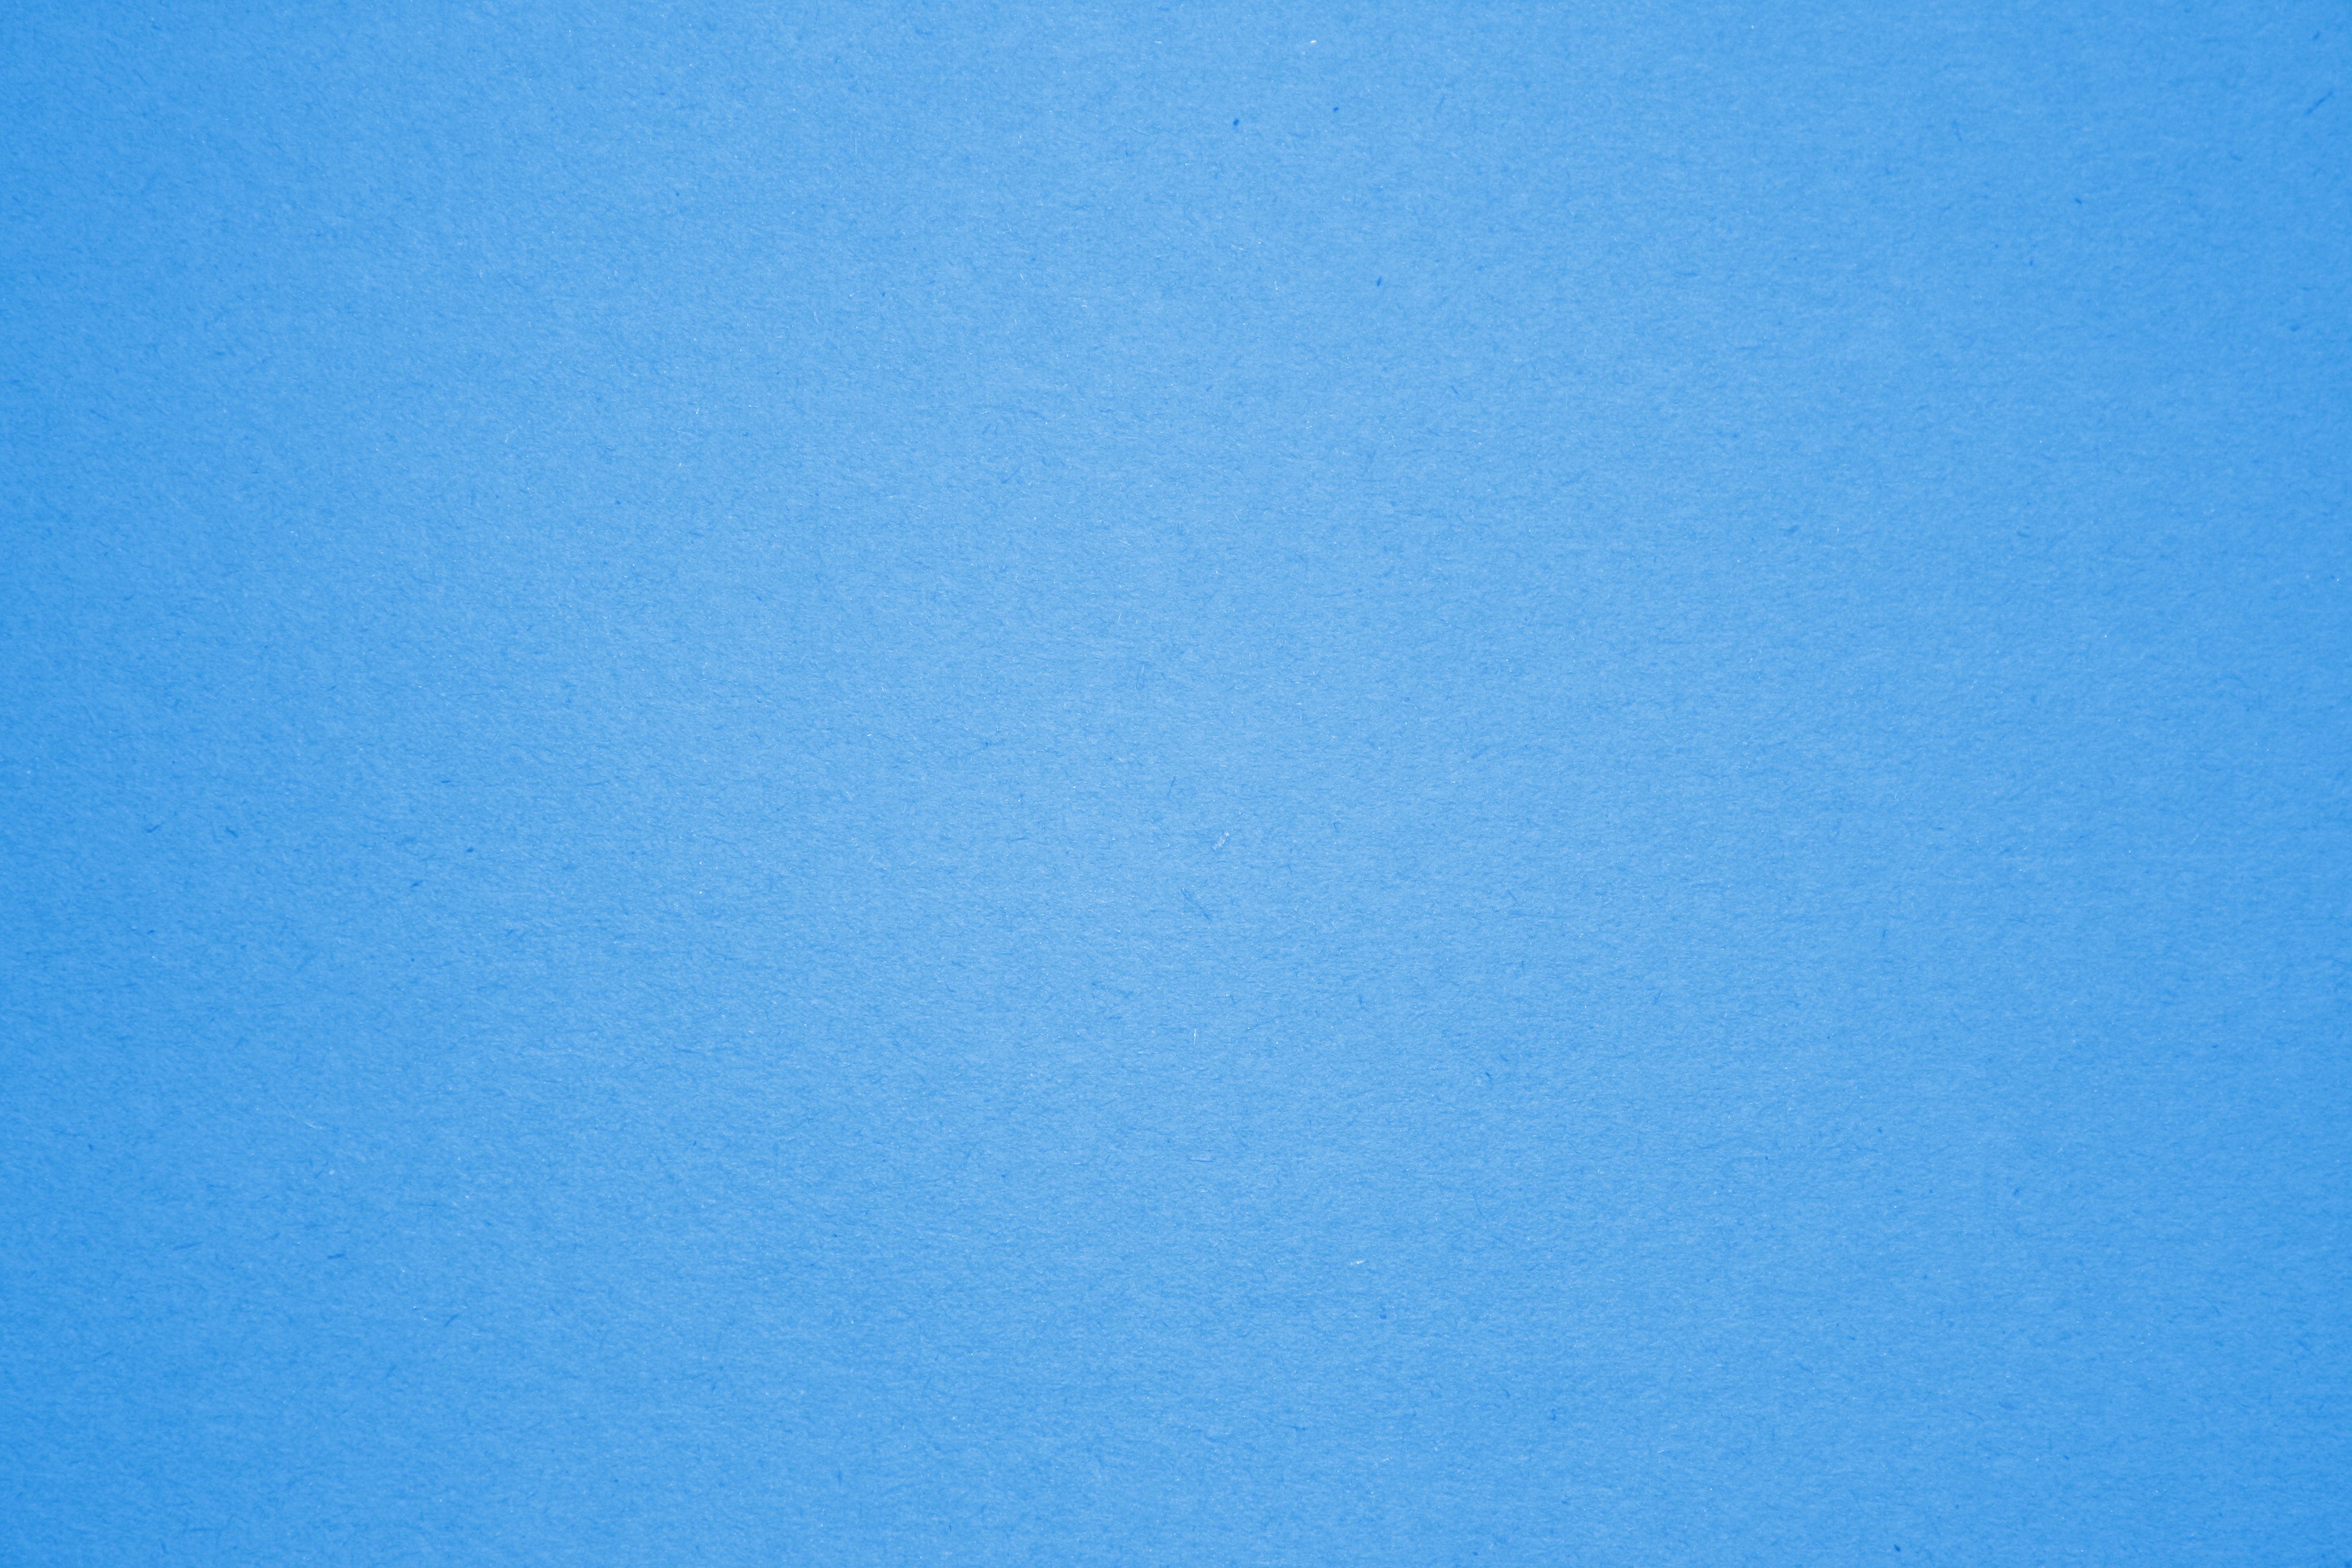 Blue Construction Paper Texture Picture, Free Photograph